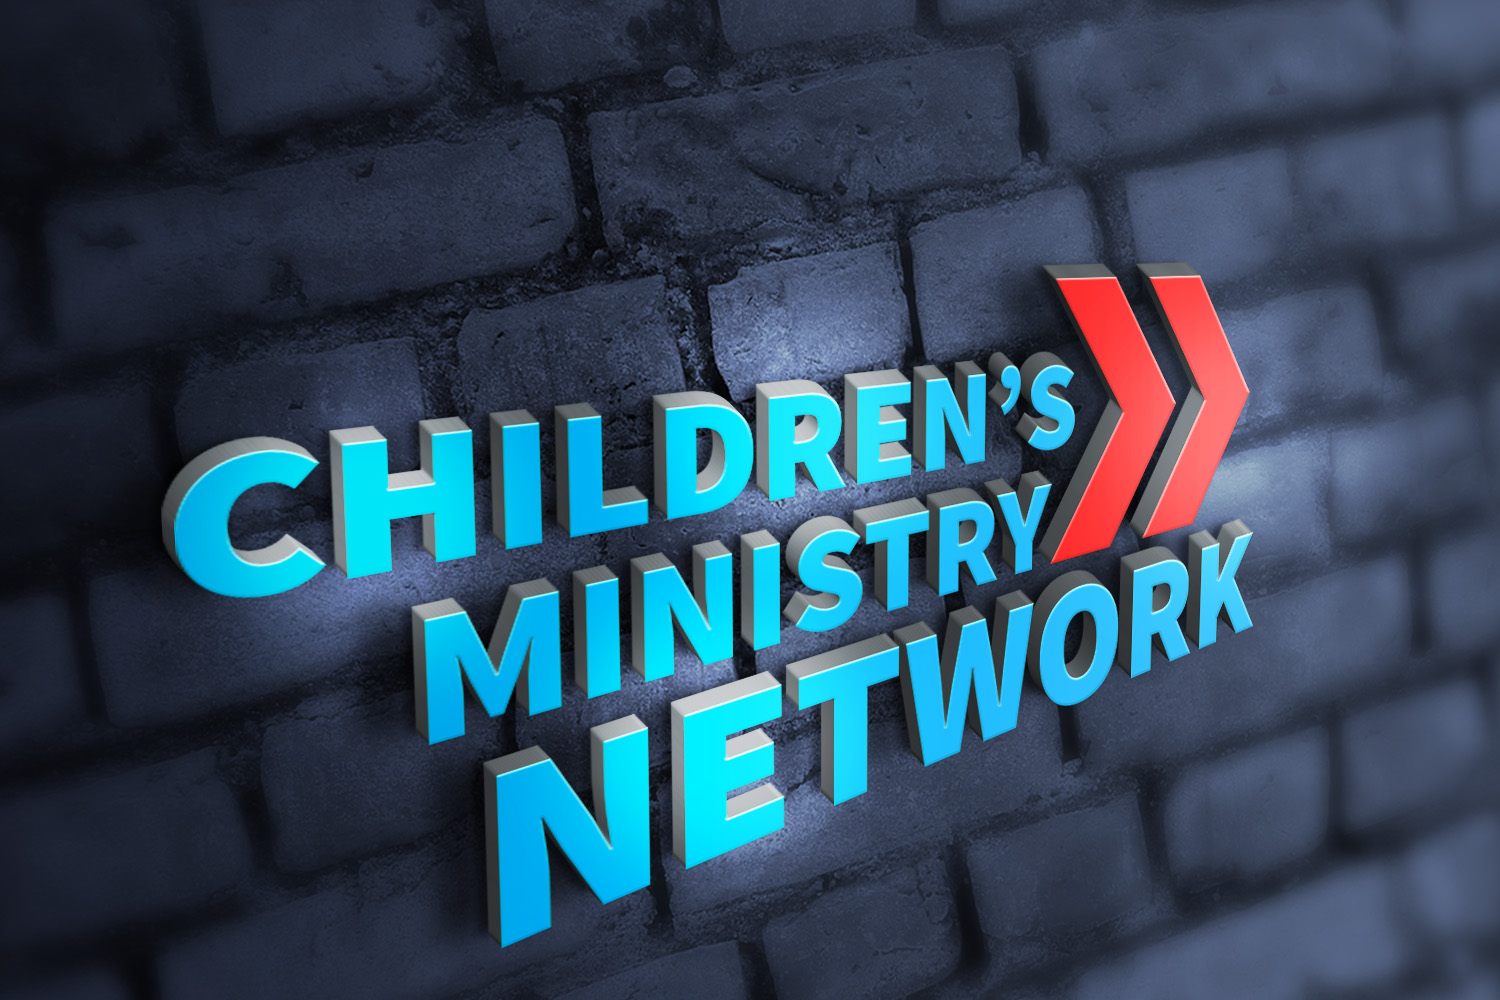 Children's Ministry Network